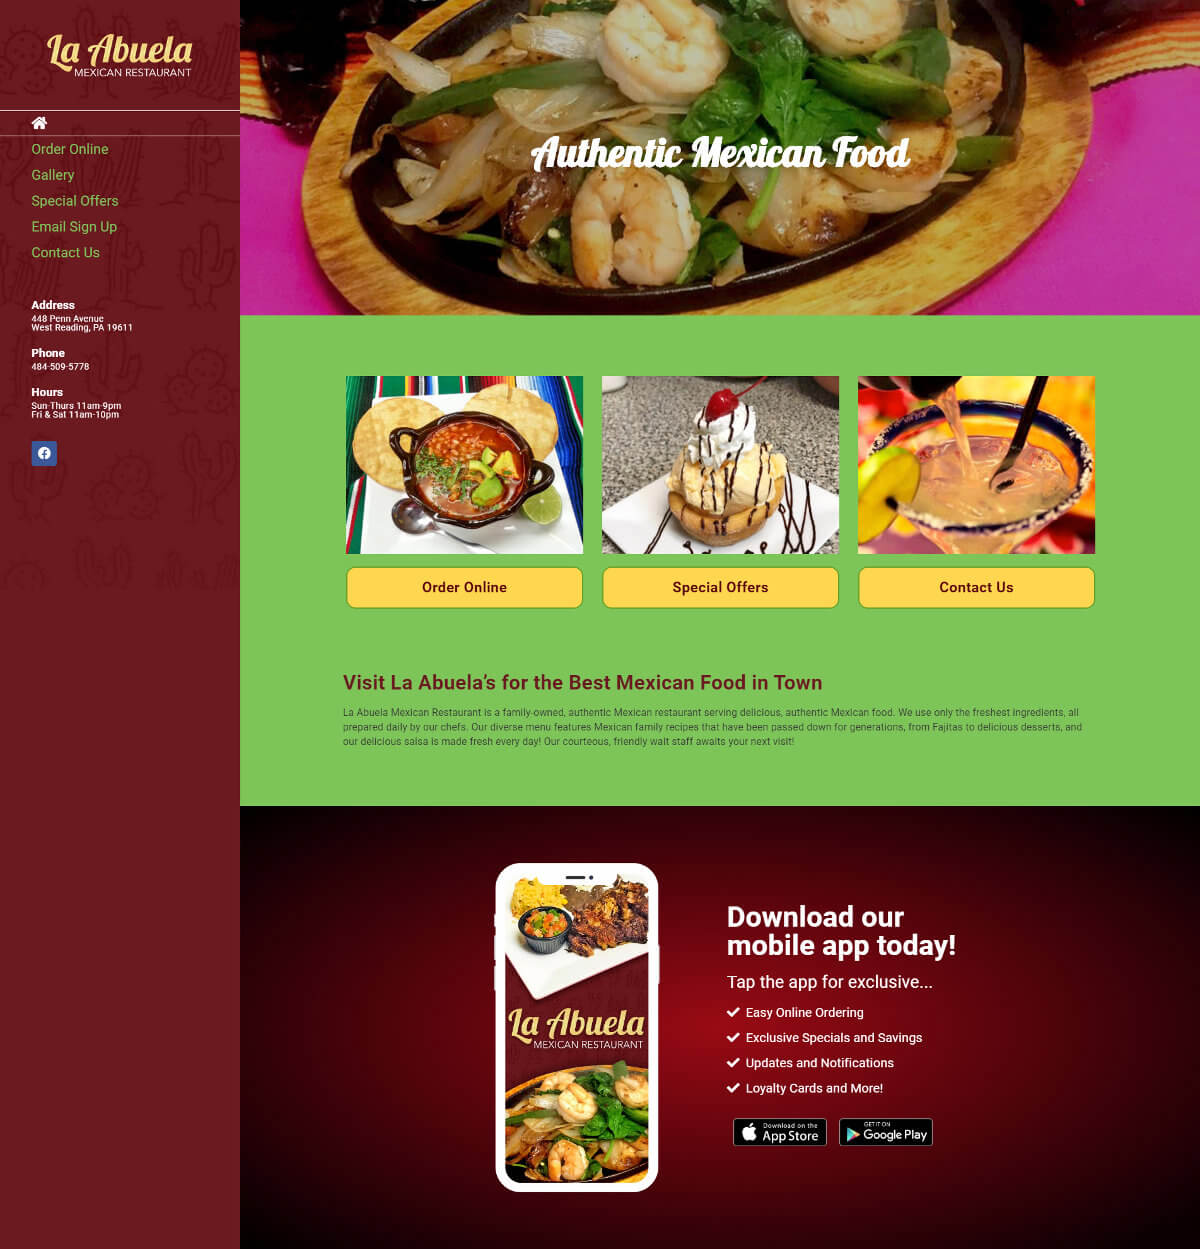 La Abuela Mexican Restaurant - TLS Mobile Friendly Website